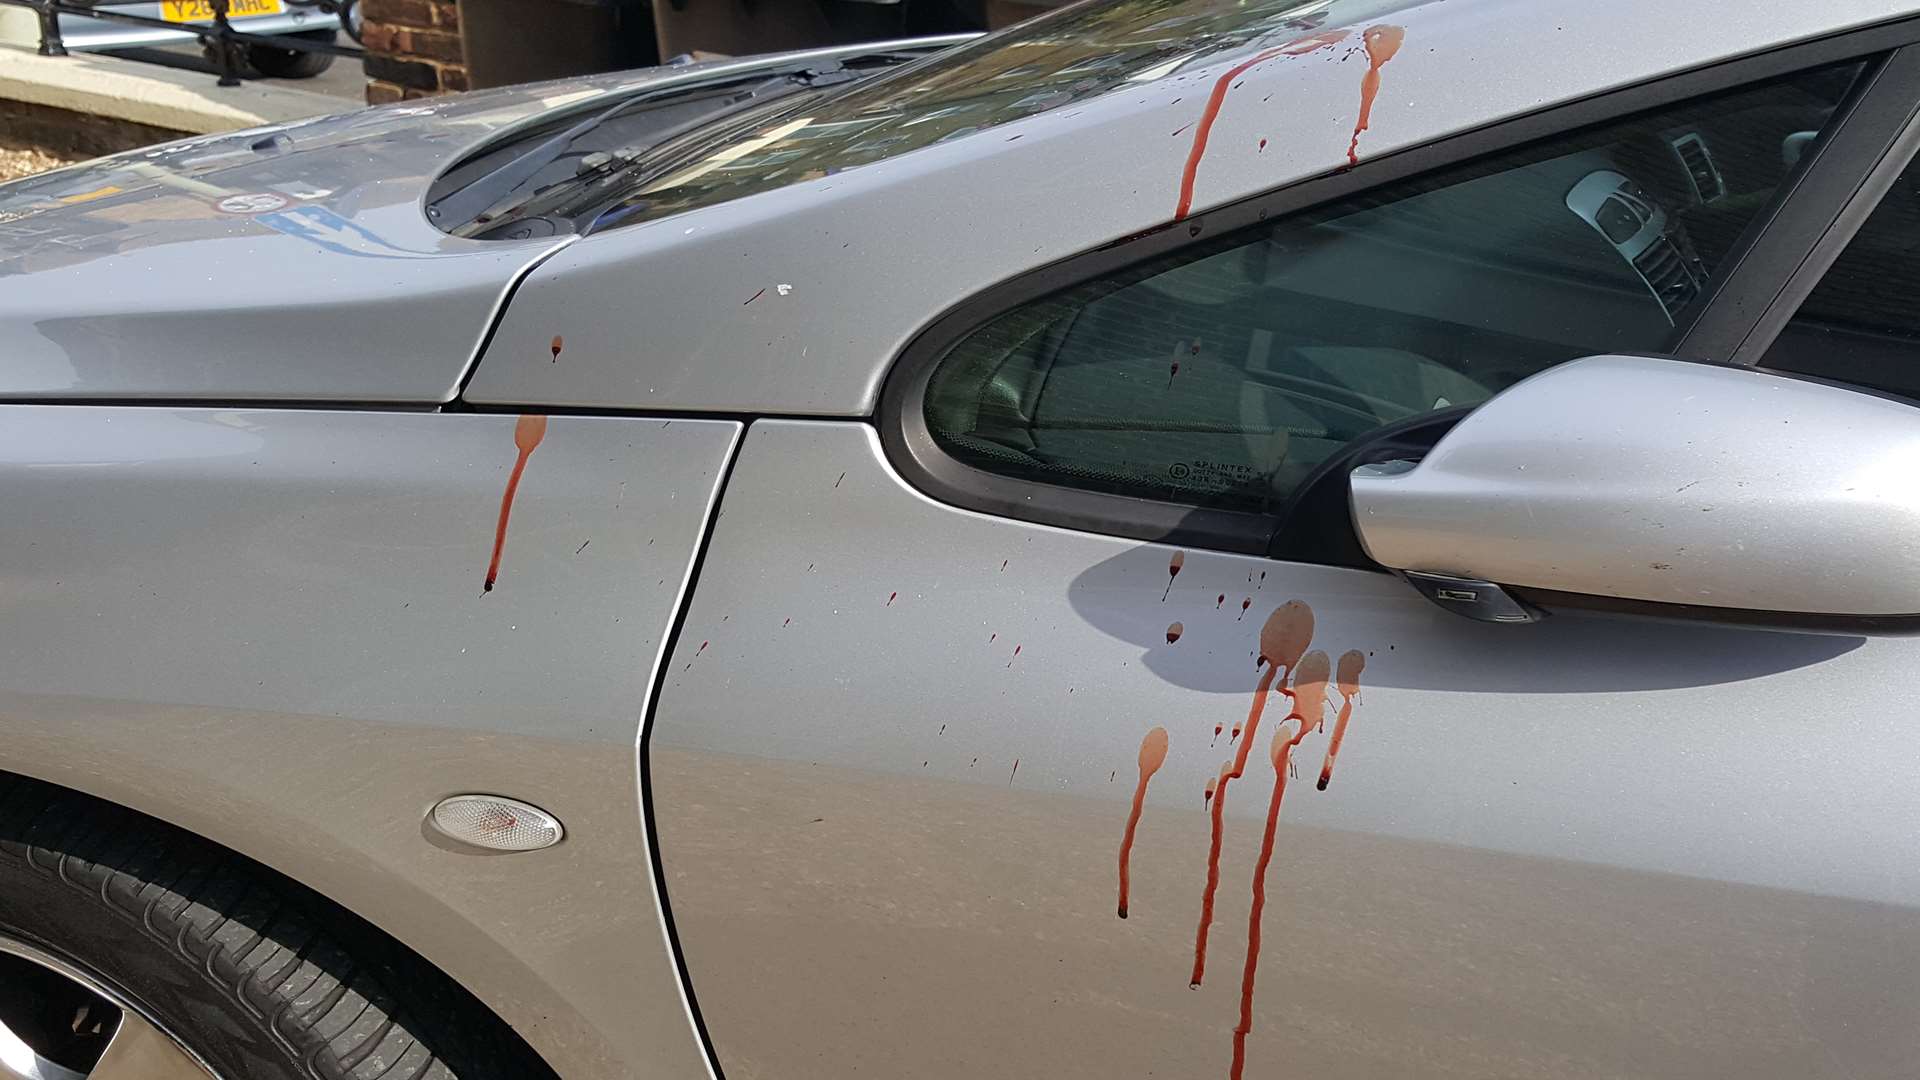 Blood splattered on a car outside the flat